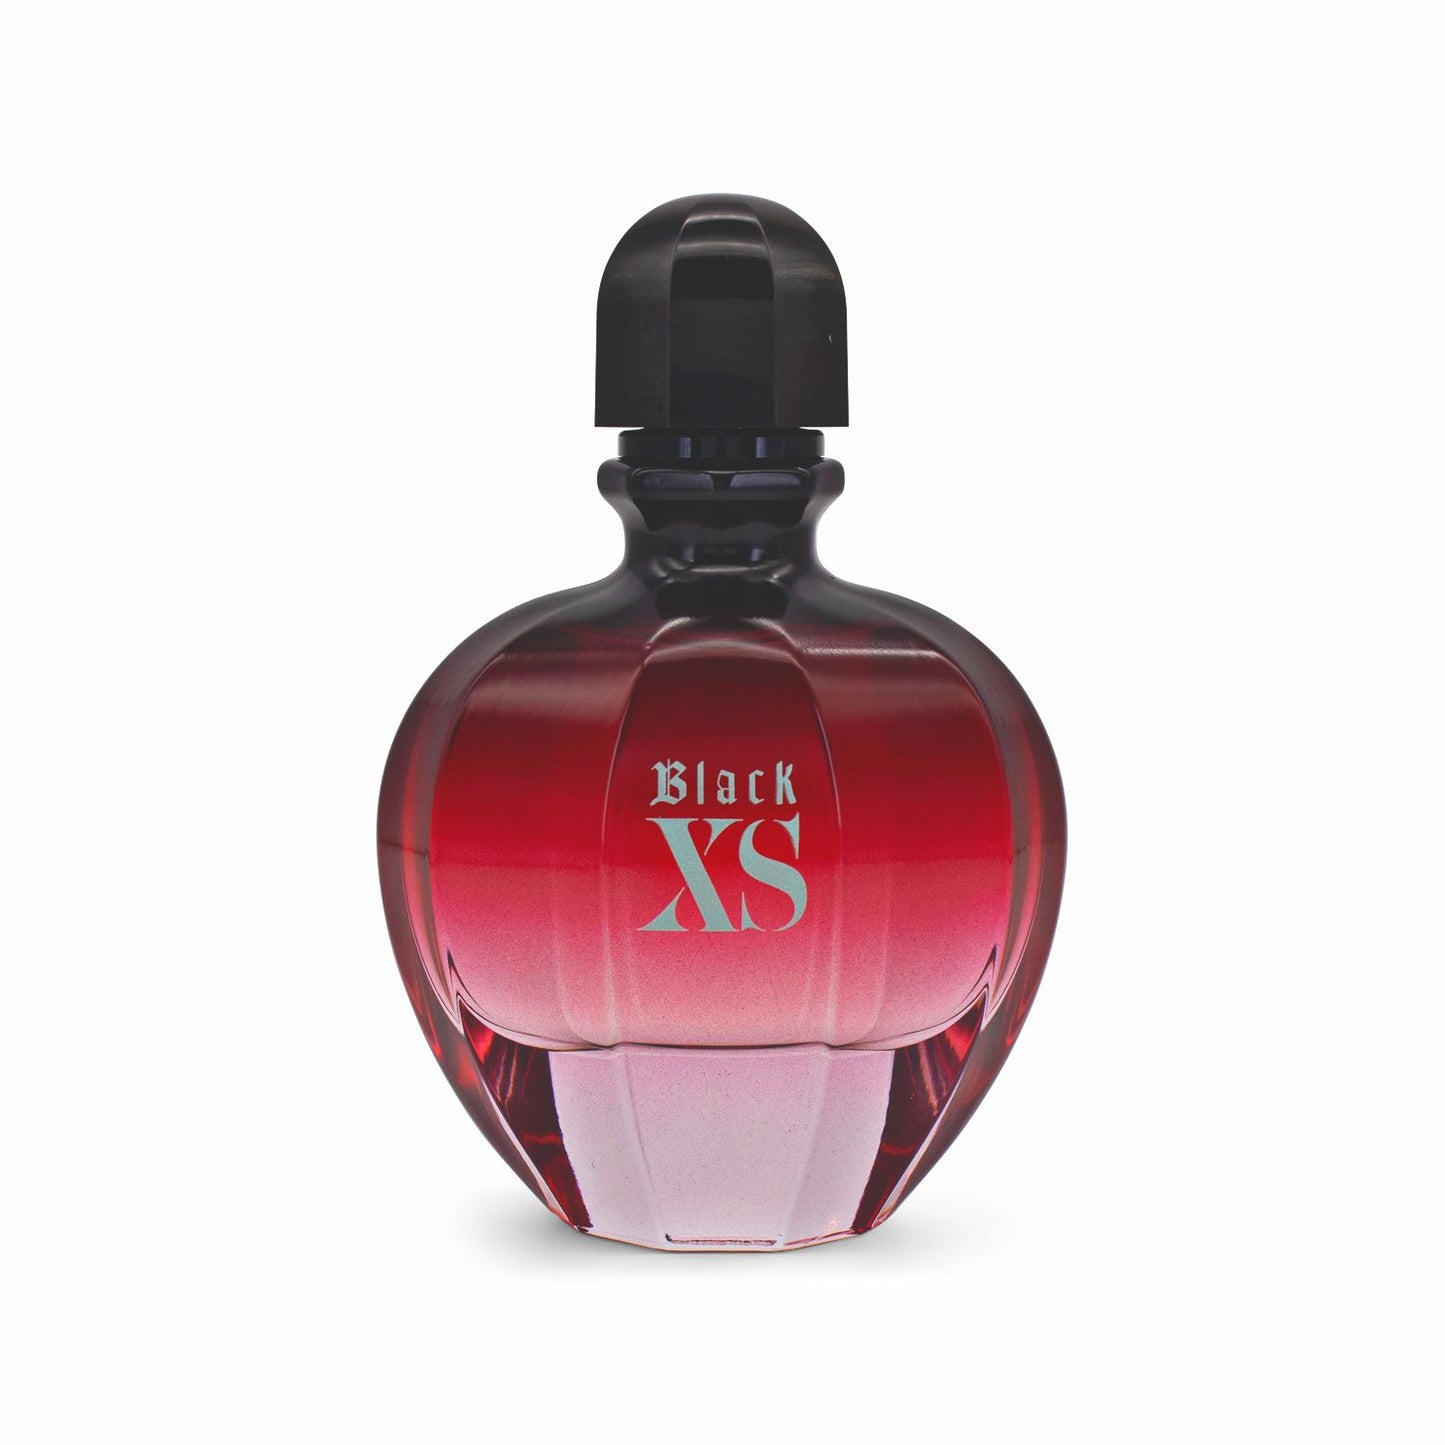 Paco Rabanne Black XS For Her Eau de Parfum Spray 80ml - Imperfect Box